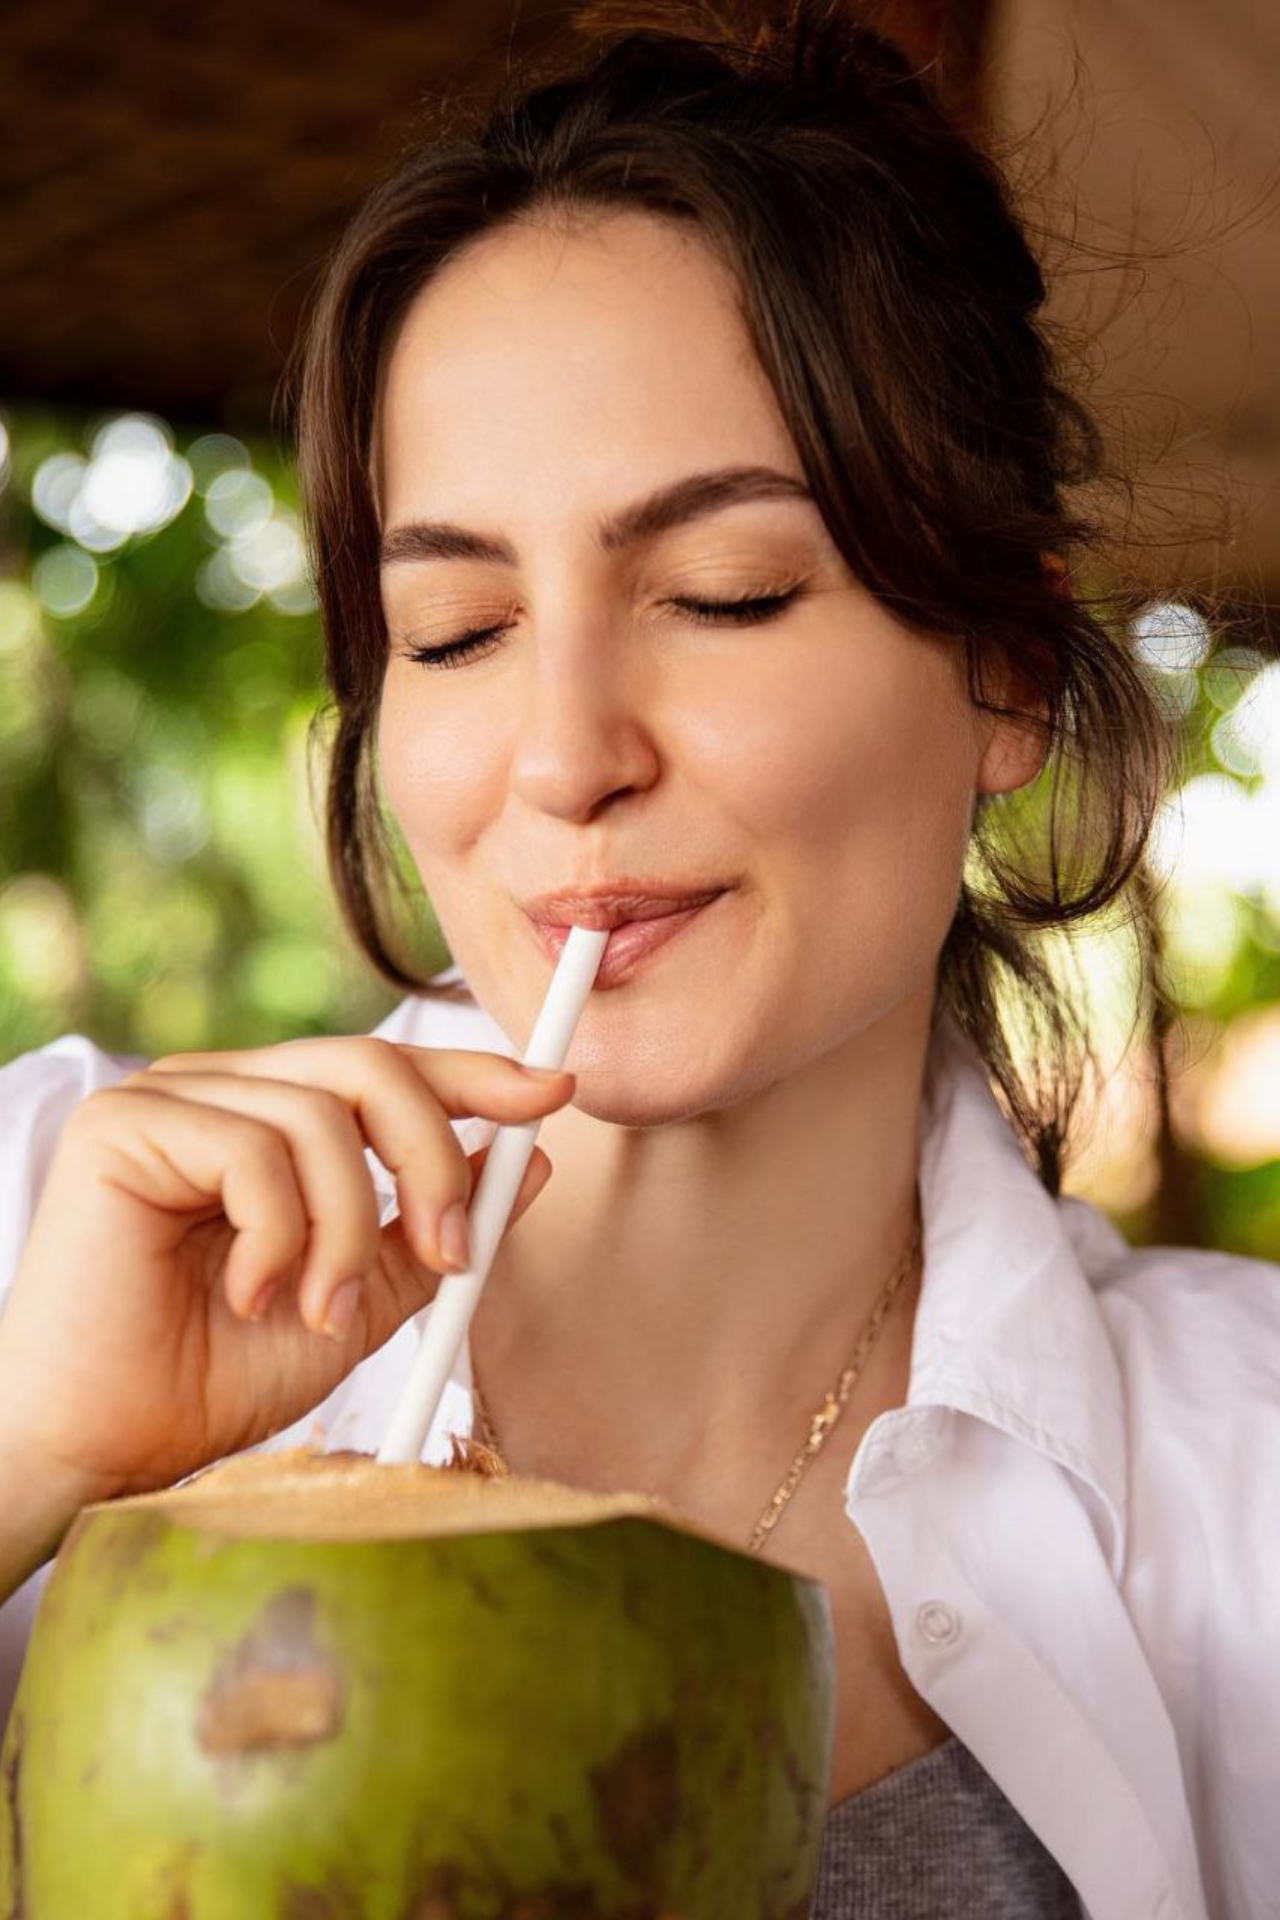 7 Healthy benefits of having coconut water regularly
